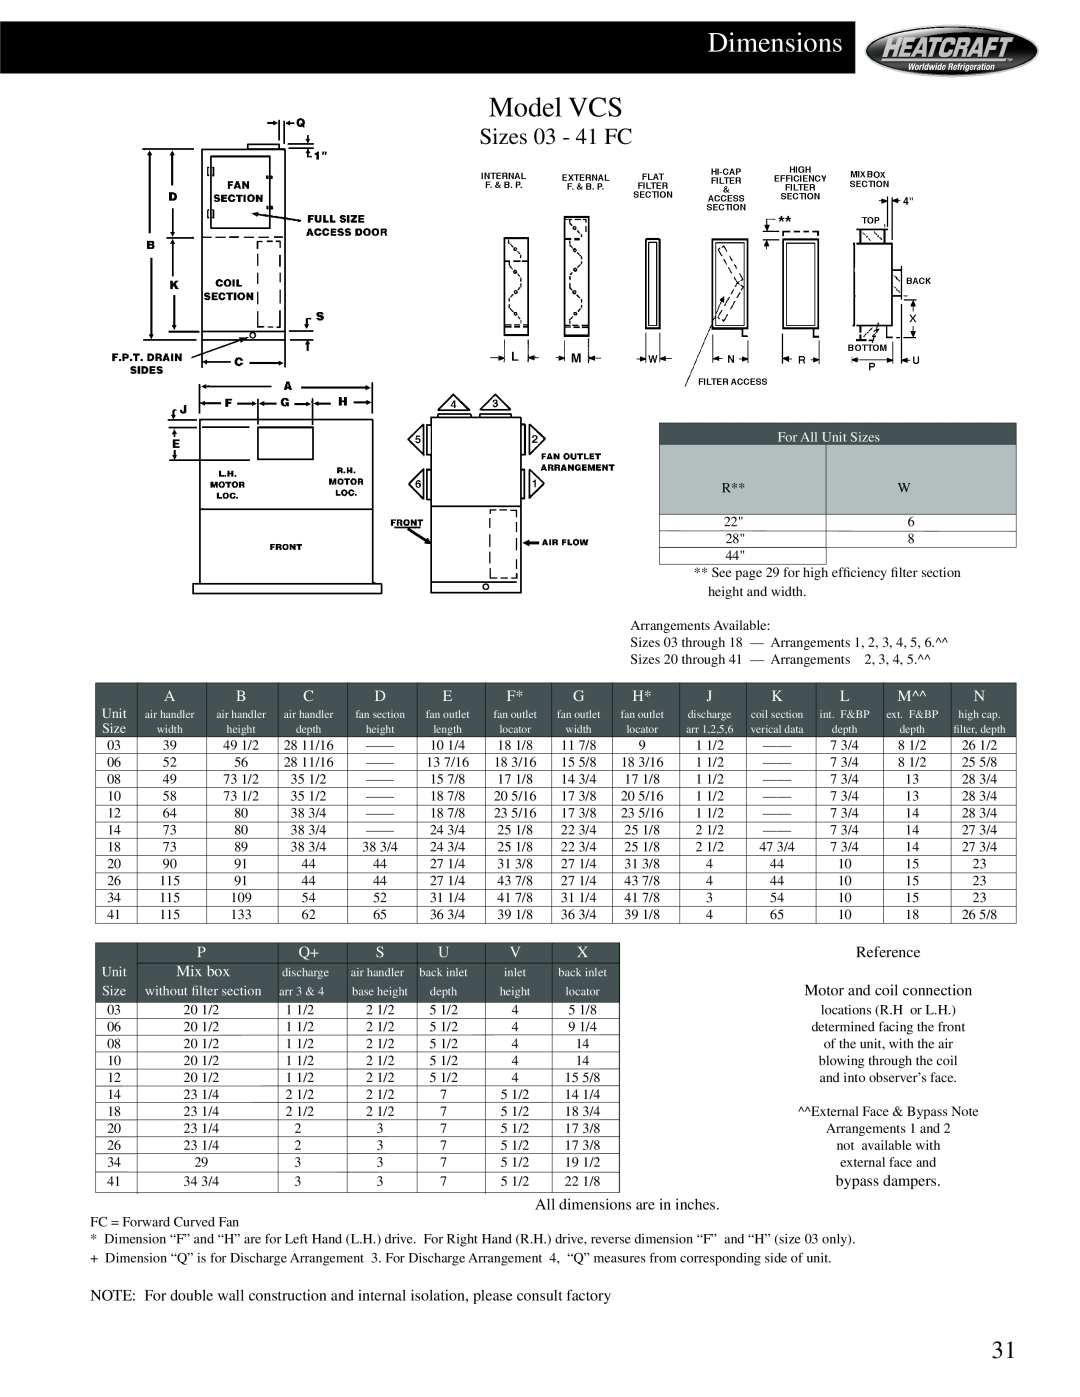 Heatcraft Refrigeration Products HCS manual Dimensions, Model VCS, Sizes 03 - 41 FC 